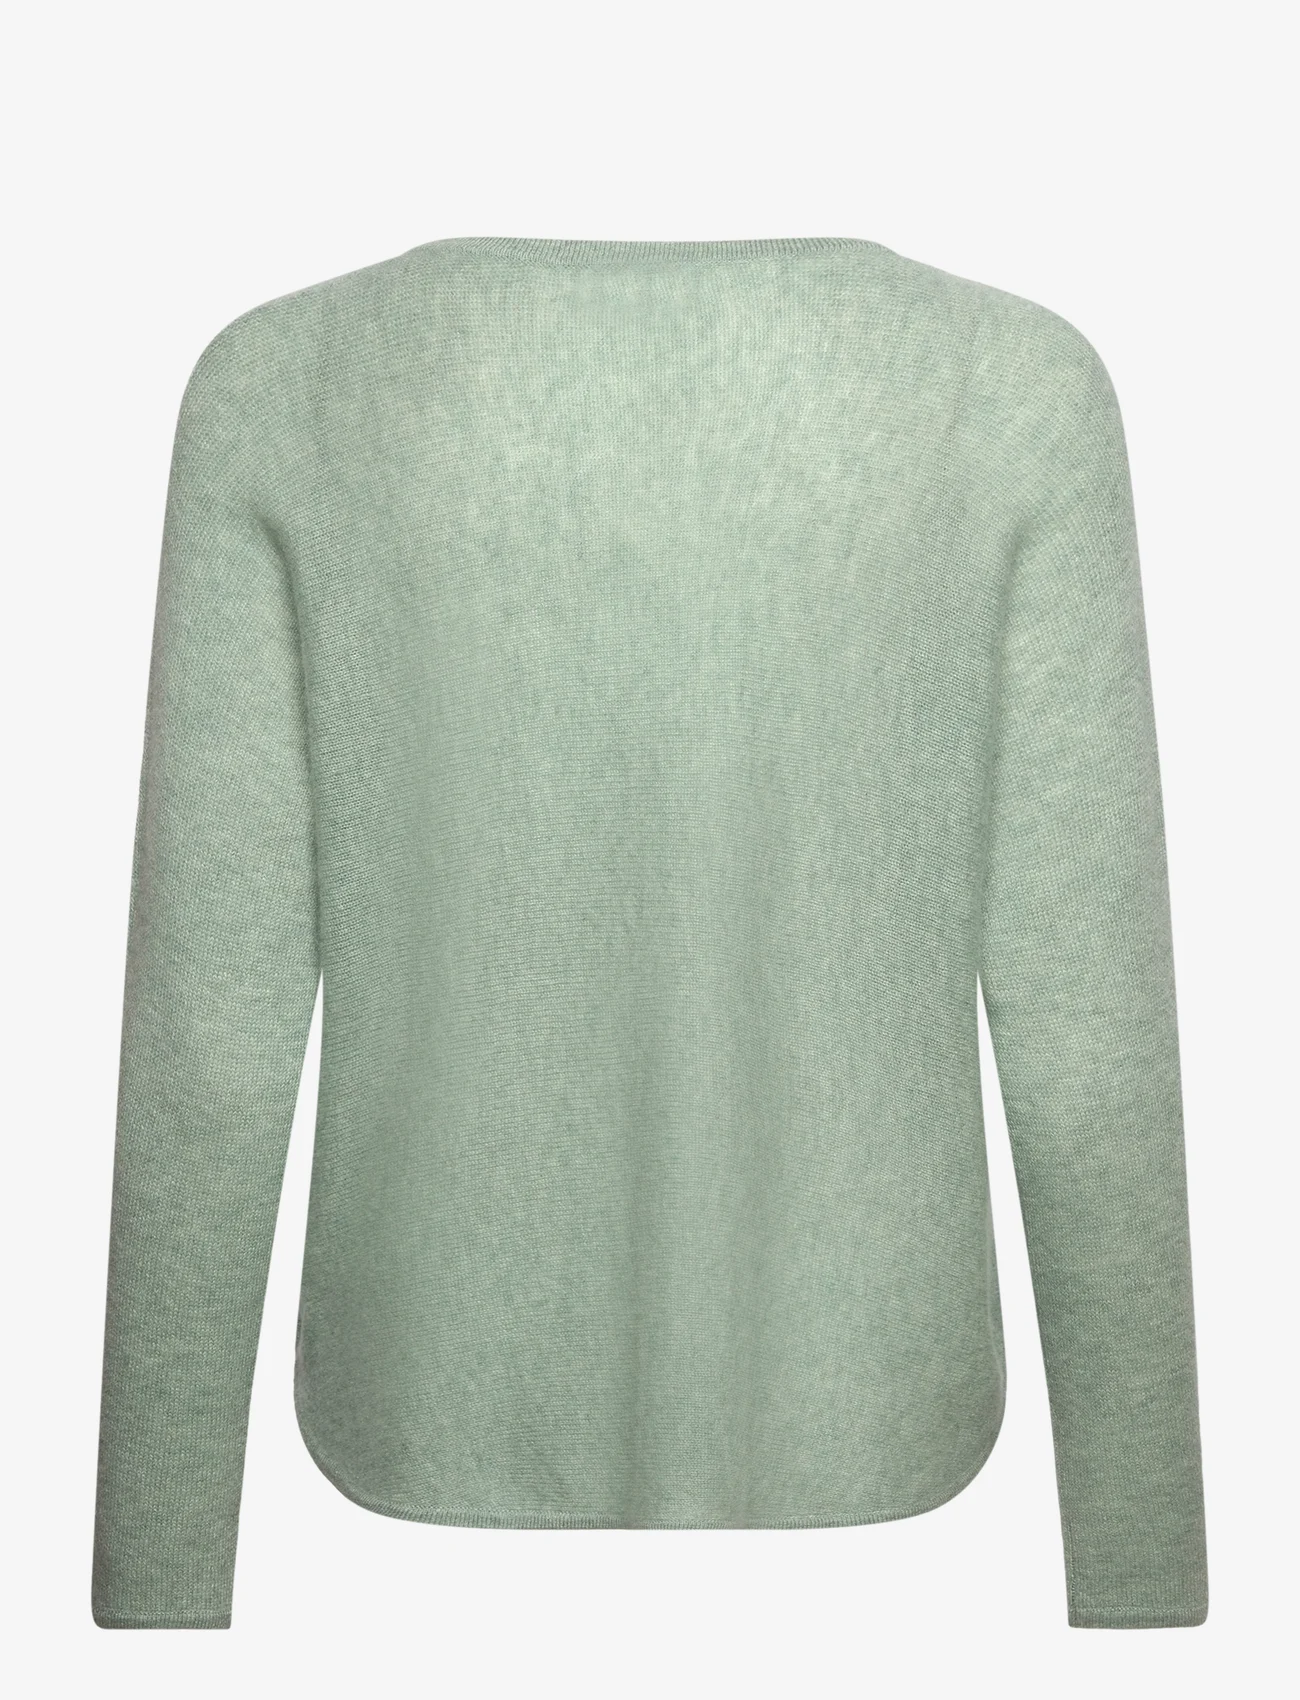 Davida Cashmere - Curved Sweater Loose Tension - pullover - sage - 1